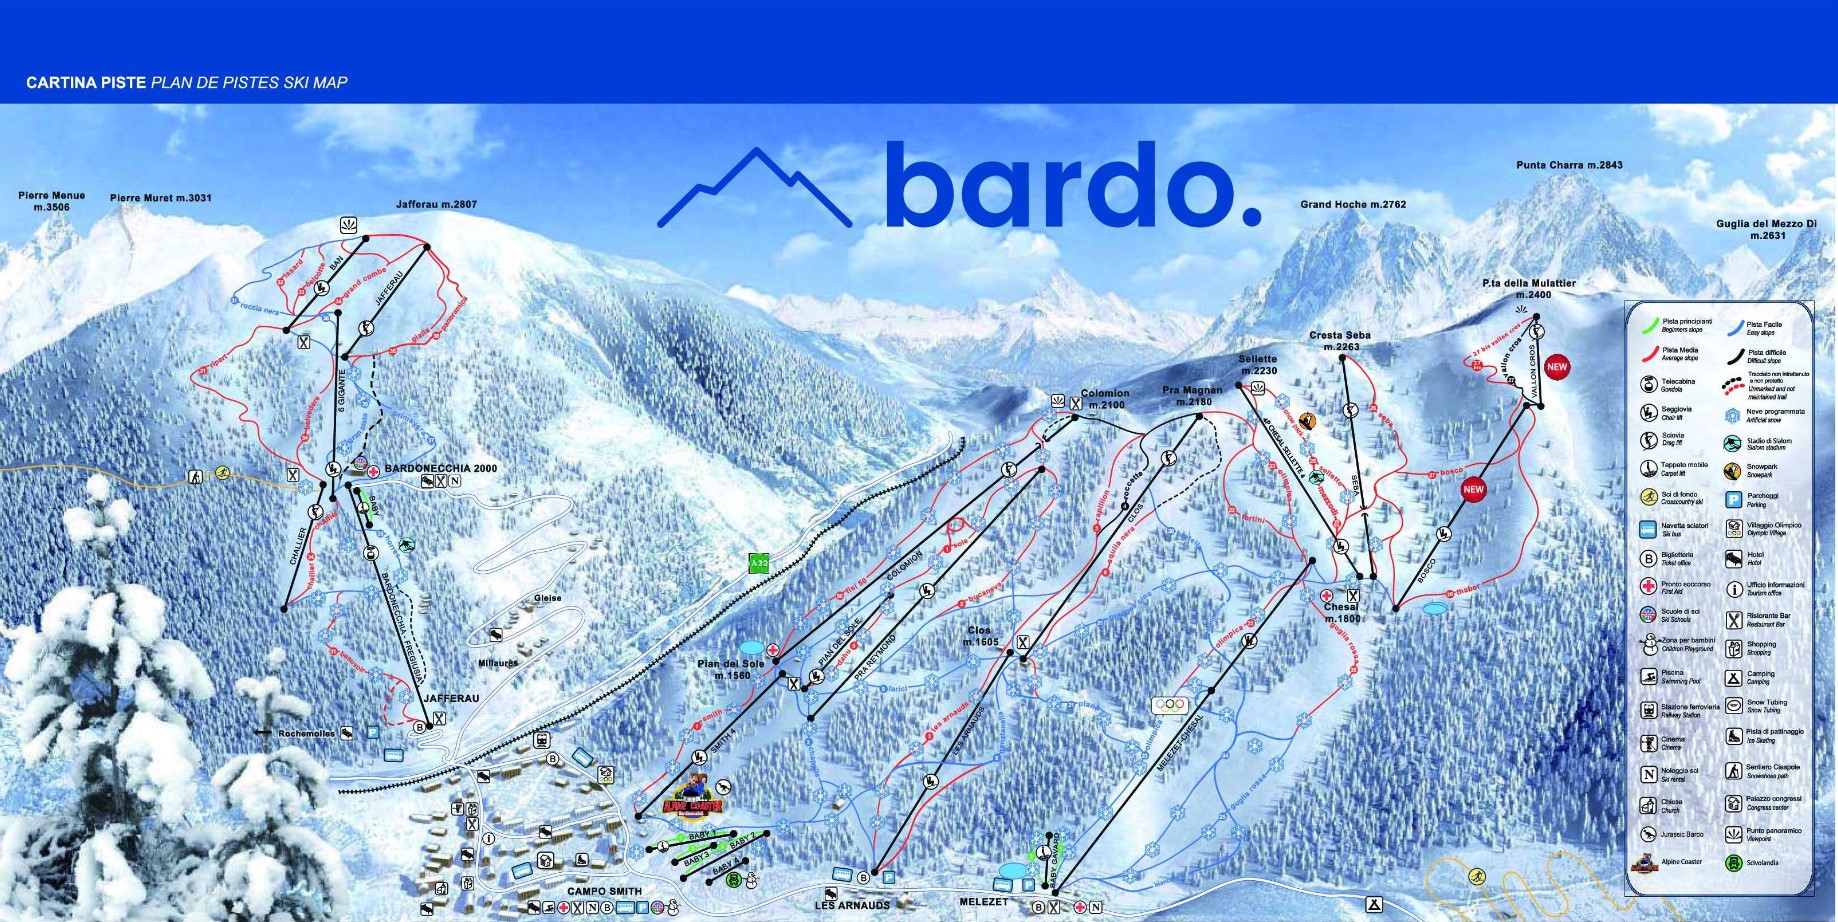 Trail Map - Bardonecchia Ski Resort Italy